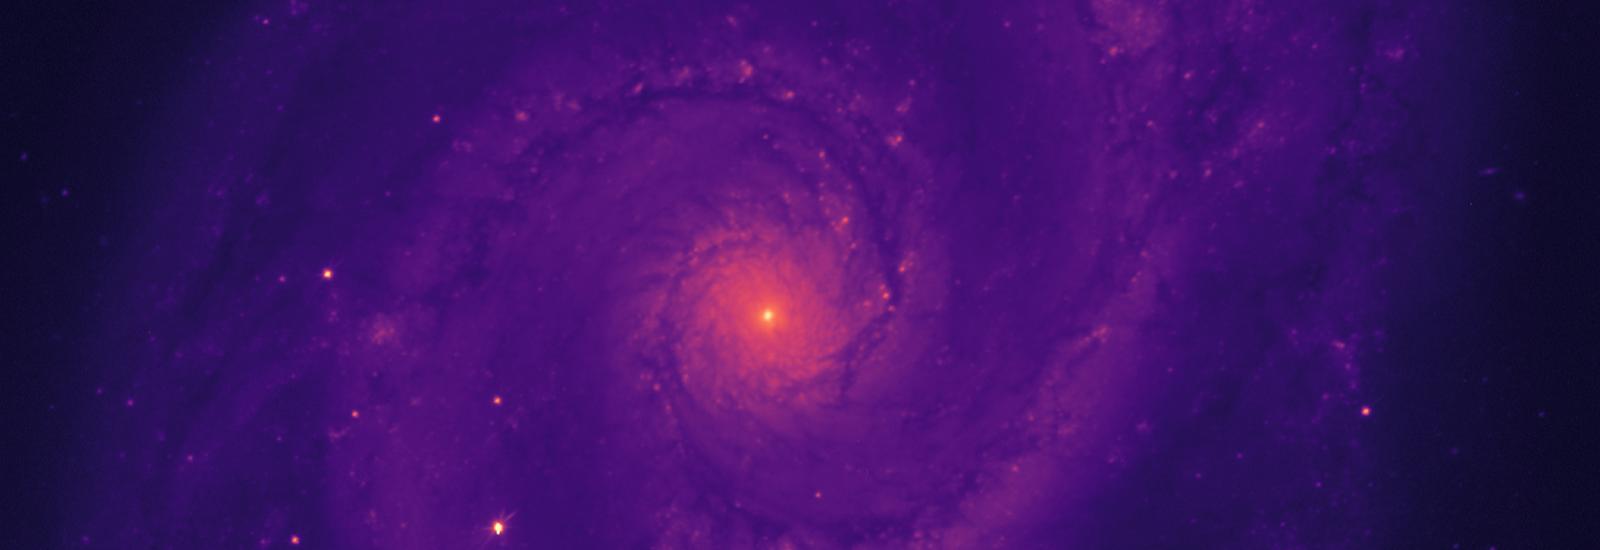 Dark Energy Spectroscopic Instrument - DESI - First light on M51